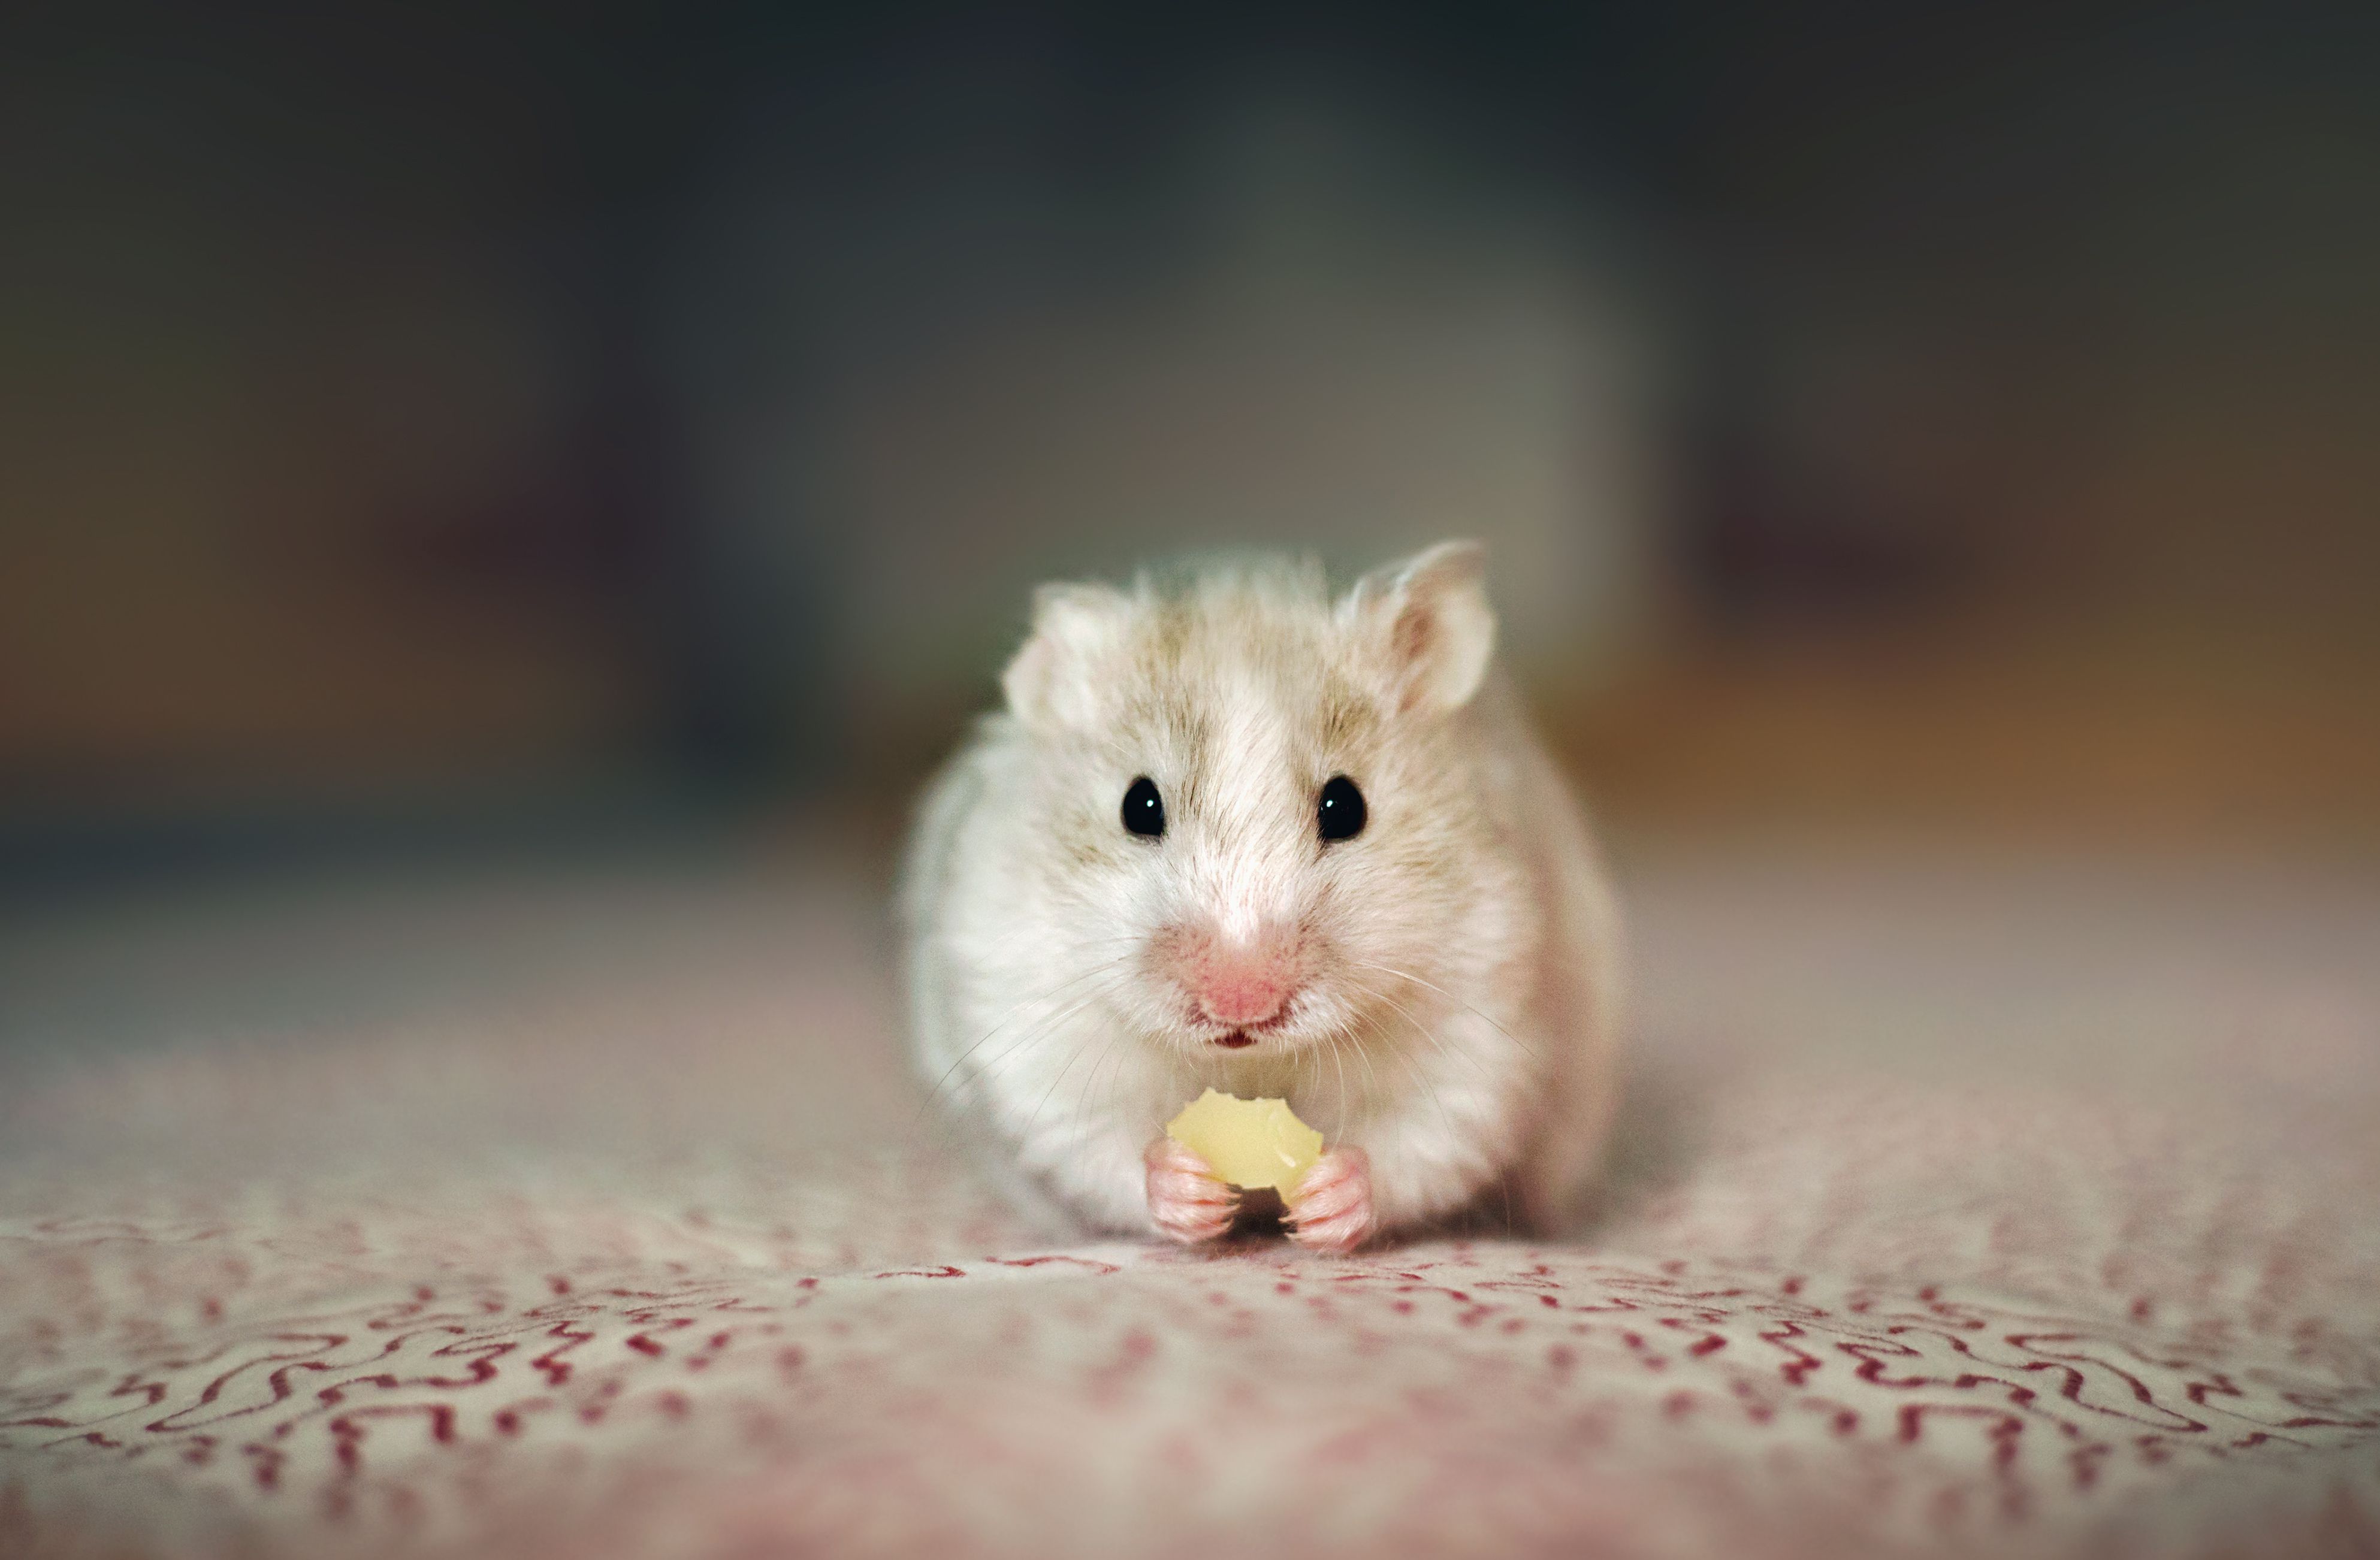 Is a Hamster a Good Pet?